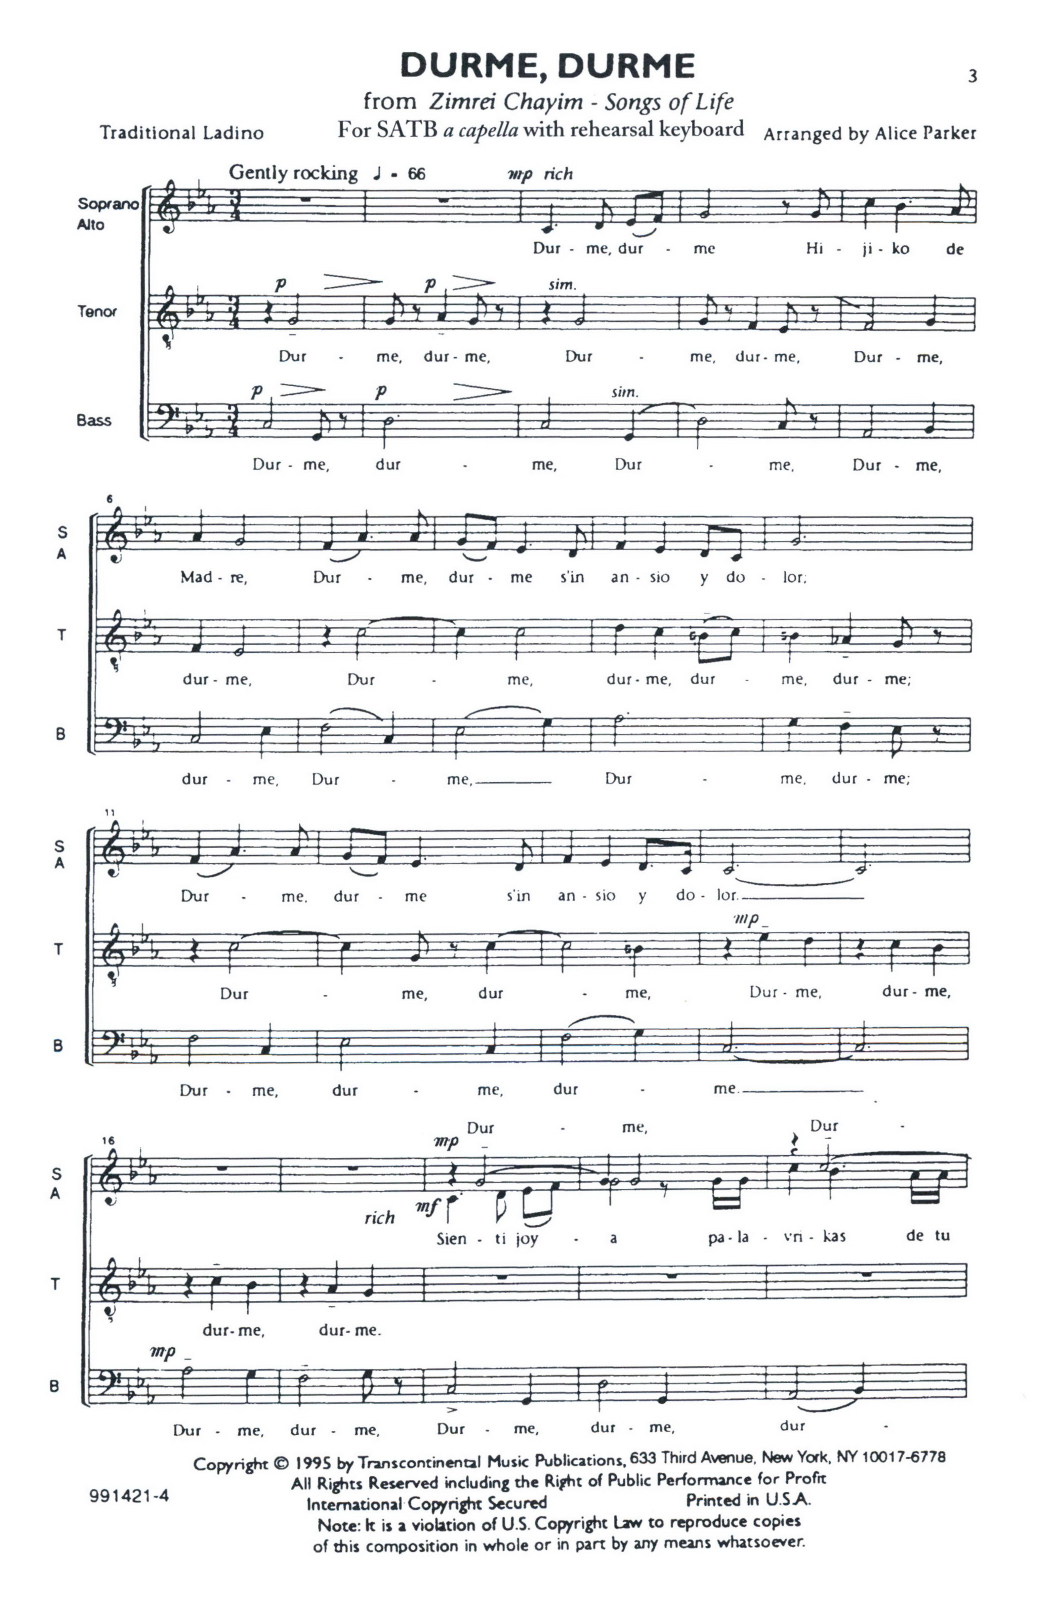 Alice Parker Durme, Durme (Sleep, Sleep) Sheet Music Notes & Chords for SATB Choir - Download or Print PDF